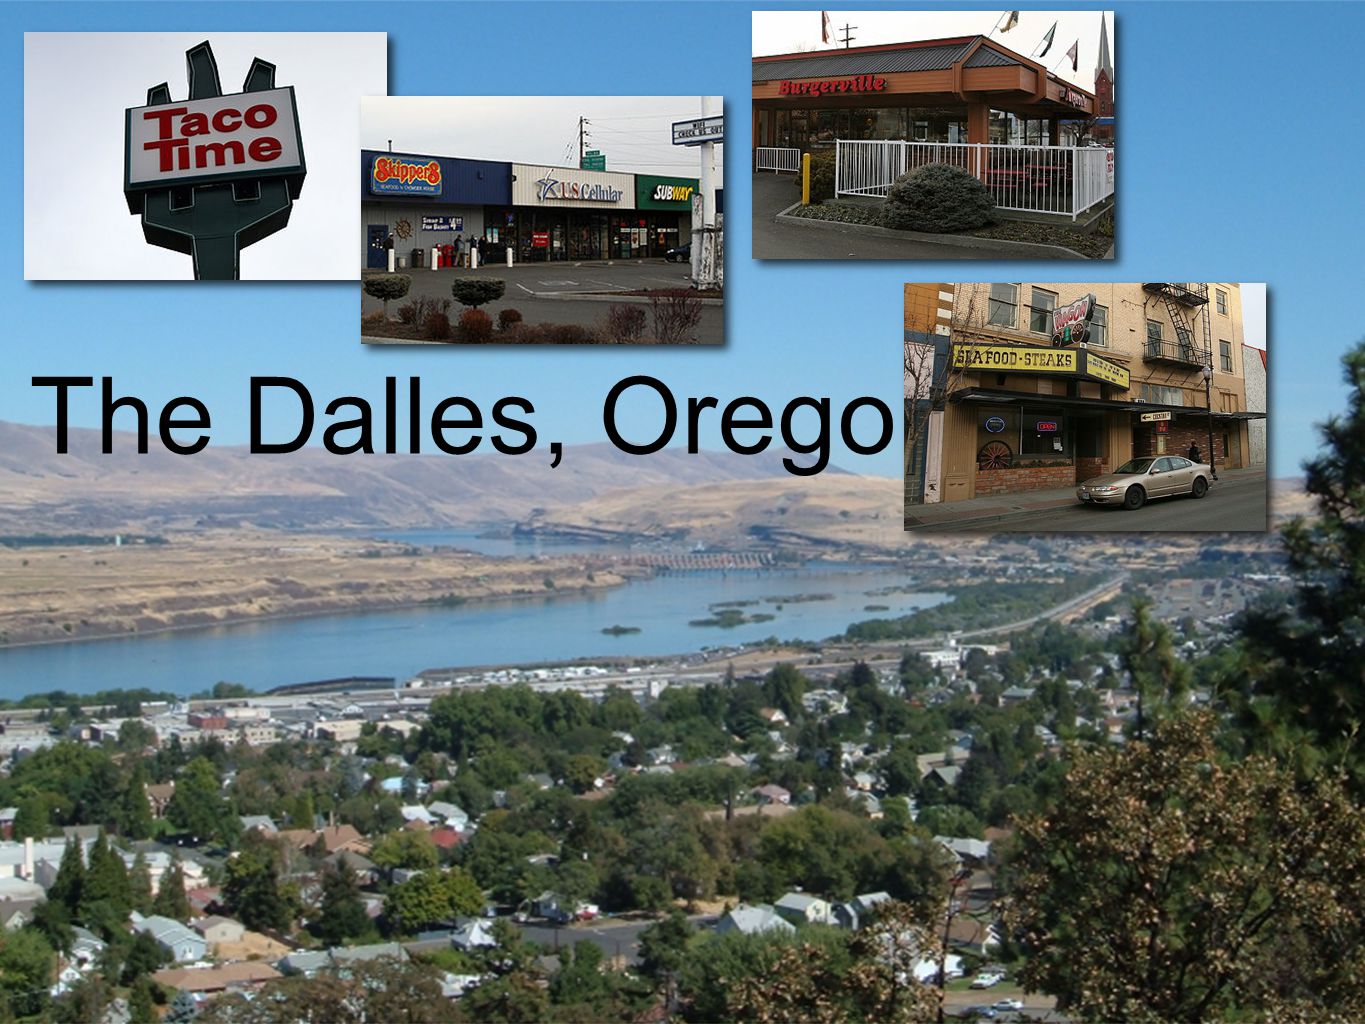 The Dalles, Oregon